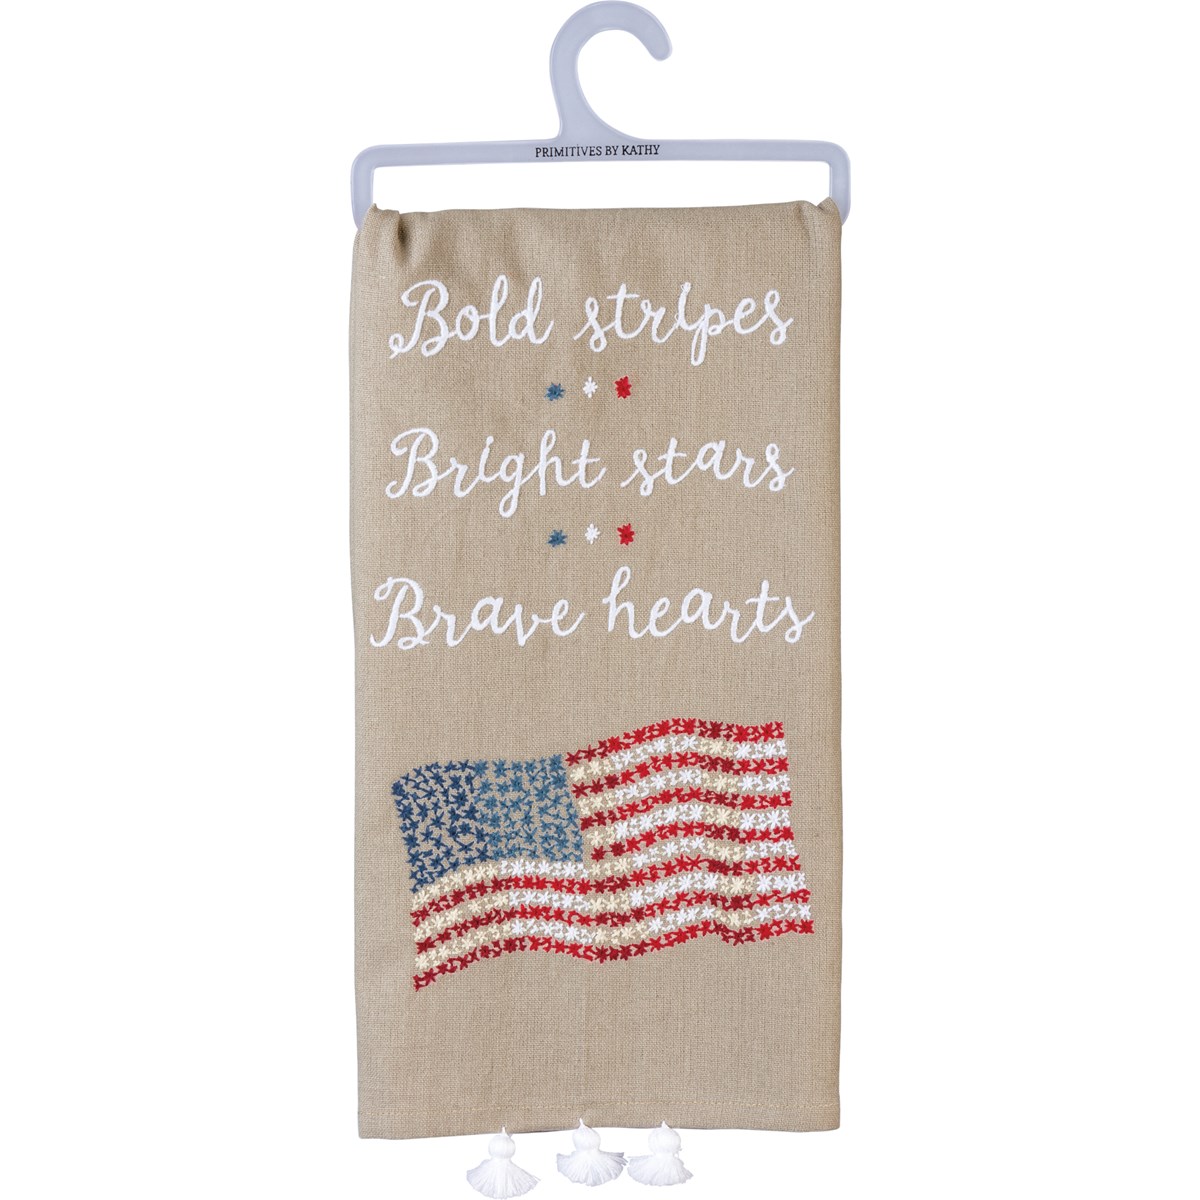 Bright Stars Brave Hearts Kitchen Towel - Cotton, Linen